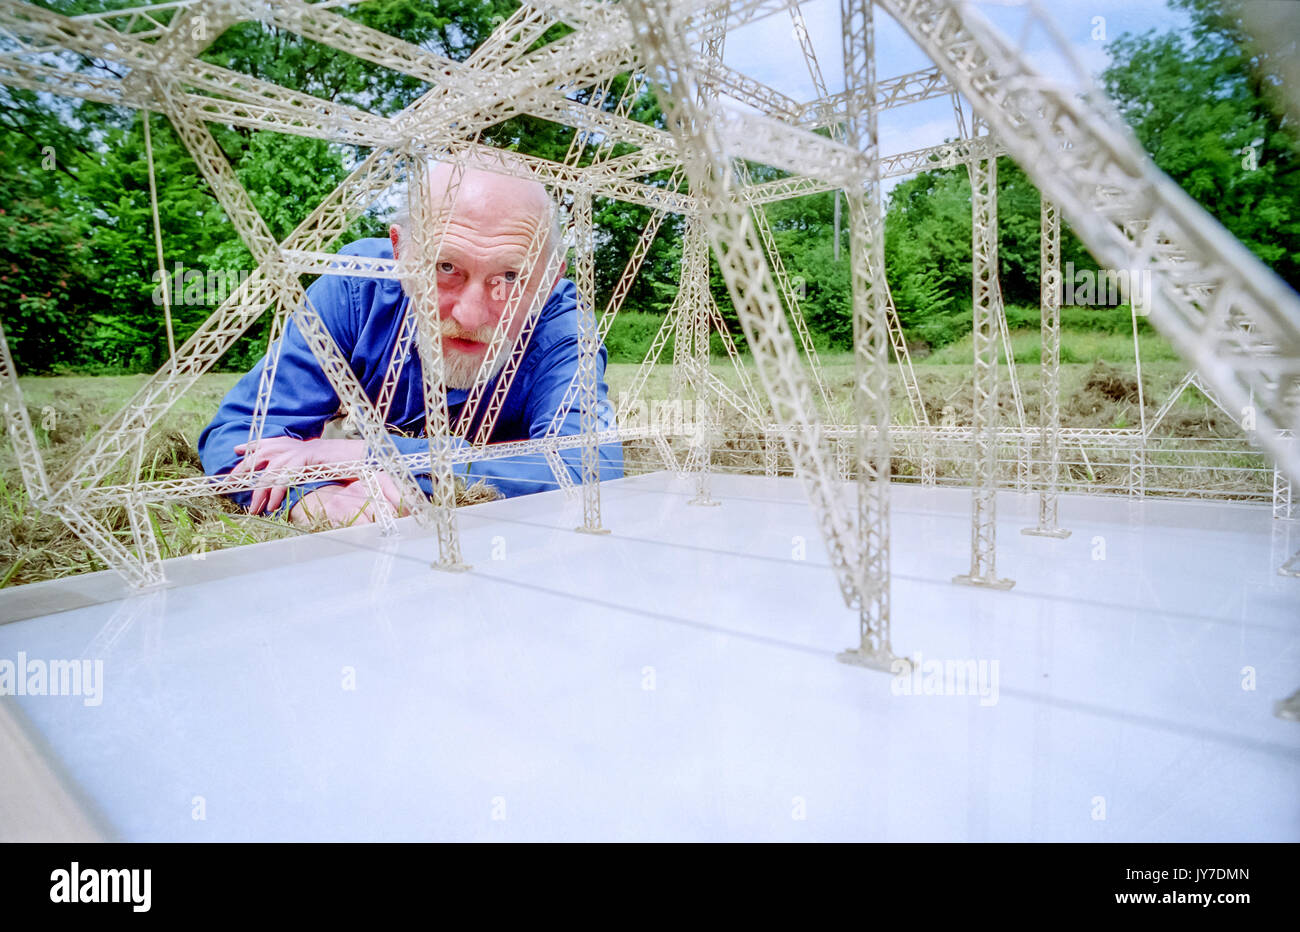 Designer Bill Harkin, designer of the Glastonbury Festival's Pyramid Stage, with the original scale model he made. Stock Photo